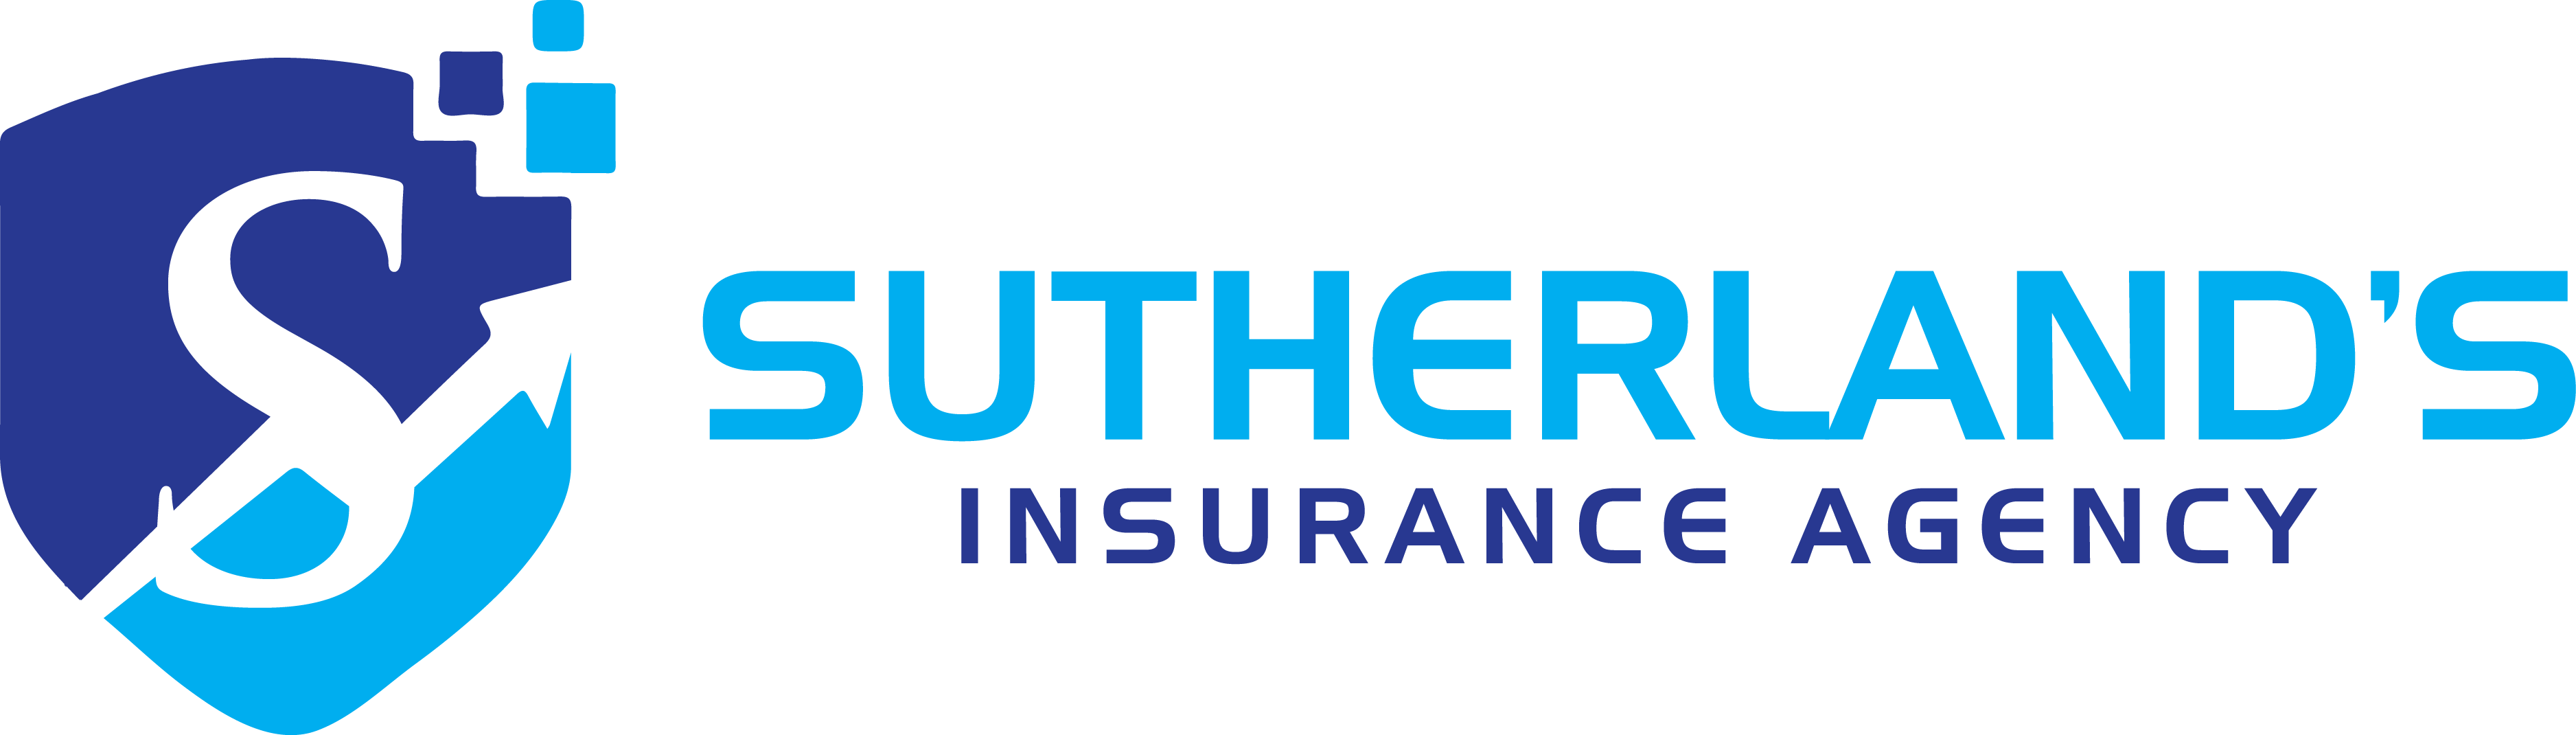 Sutherland’s Insurance Agency